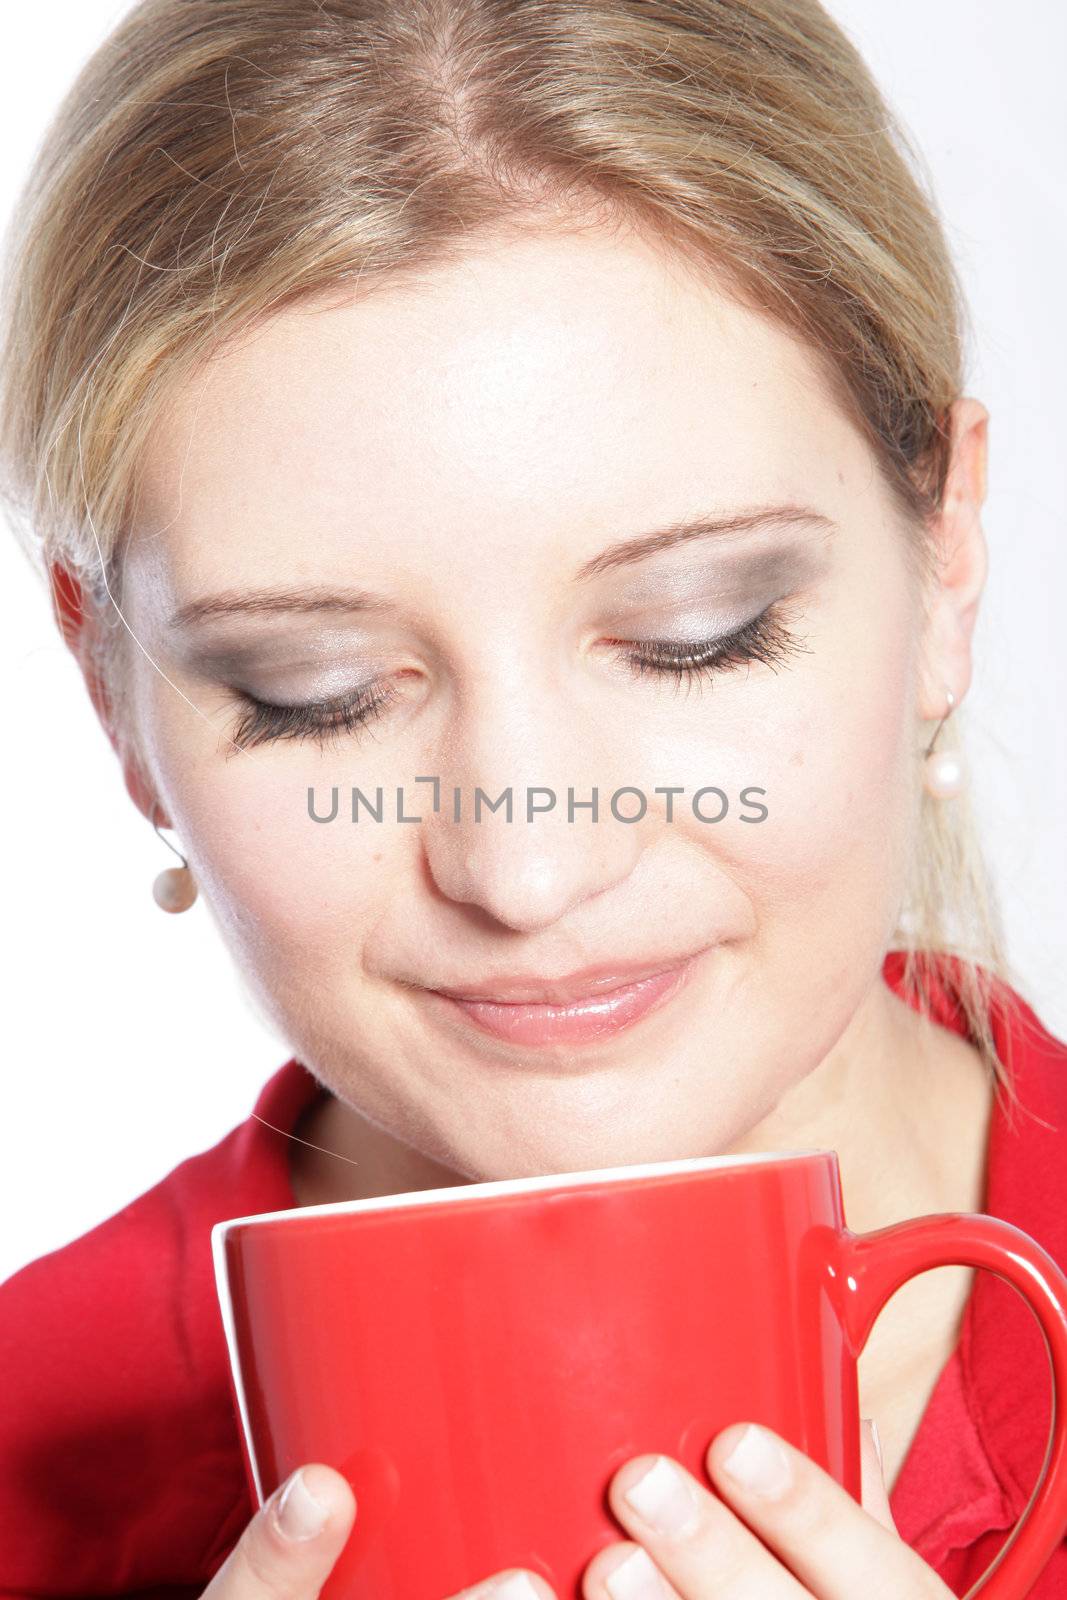 Woman enjoying a mug of coffee by Farina6000